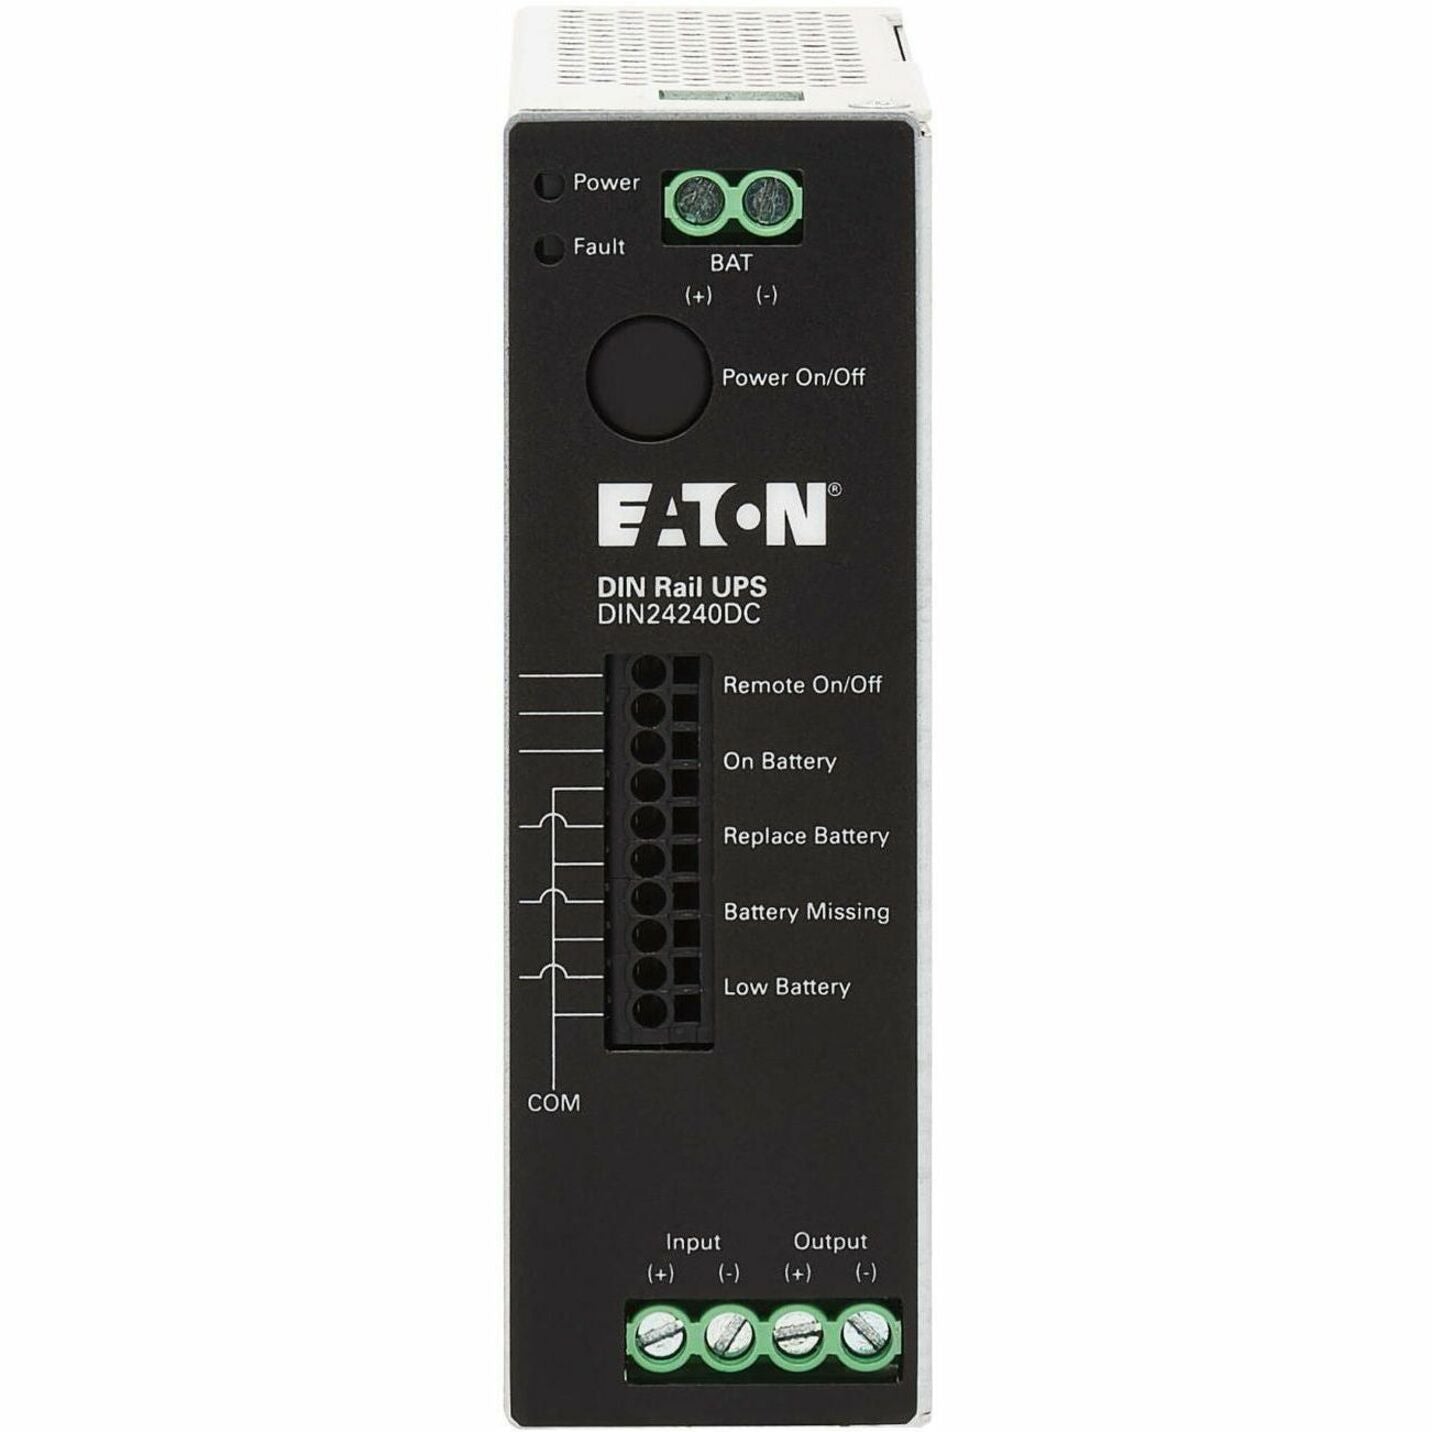 Eaton DIN24240DC General Purpose UPS, 240VA DIN Rail UPS, 24V DC Input/Output